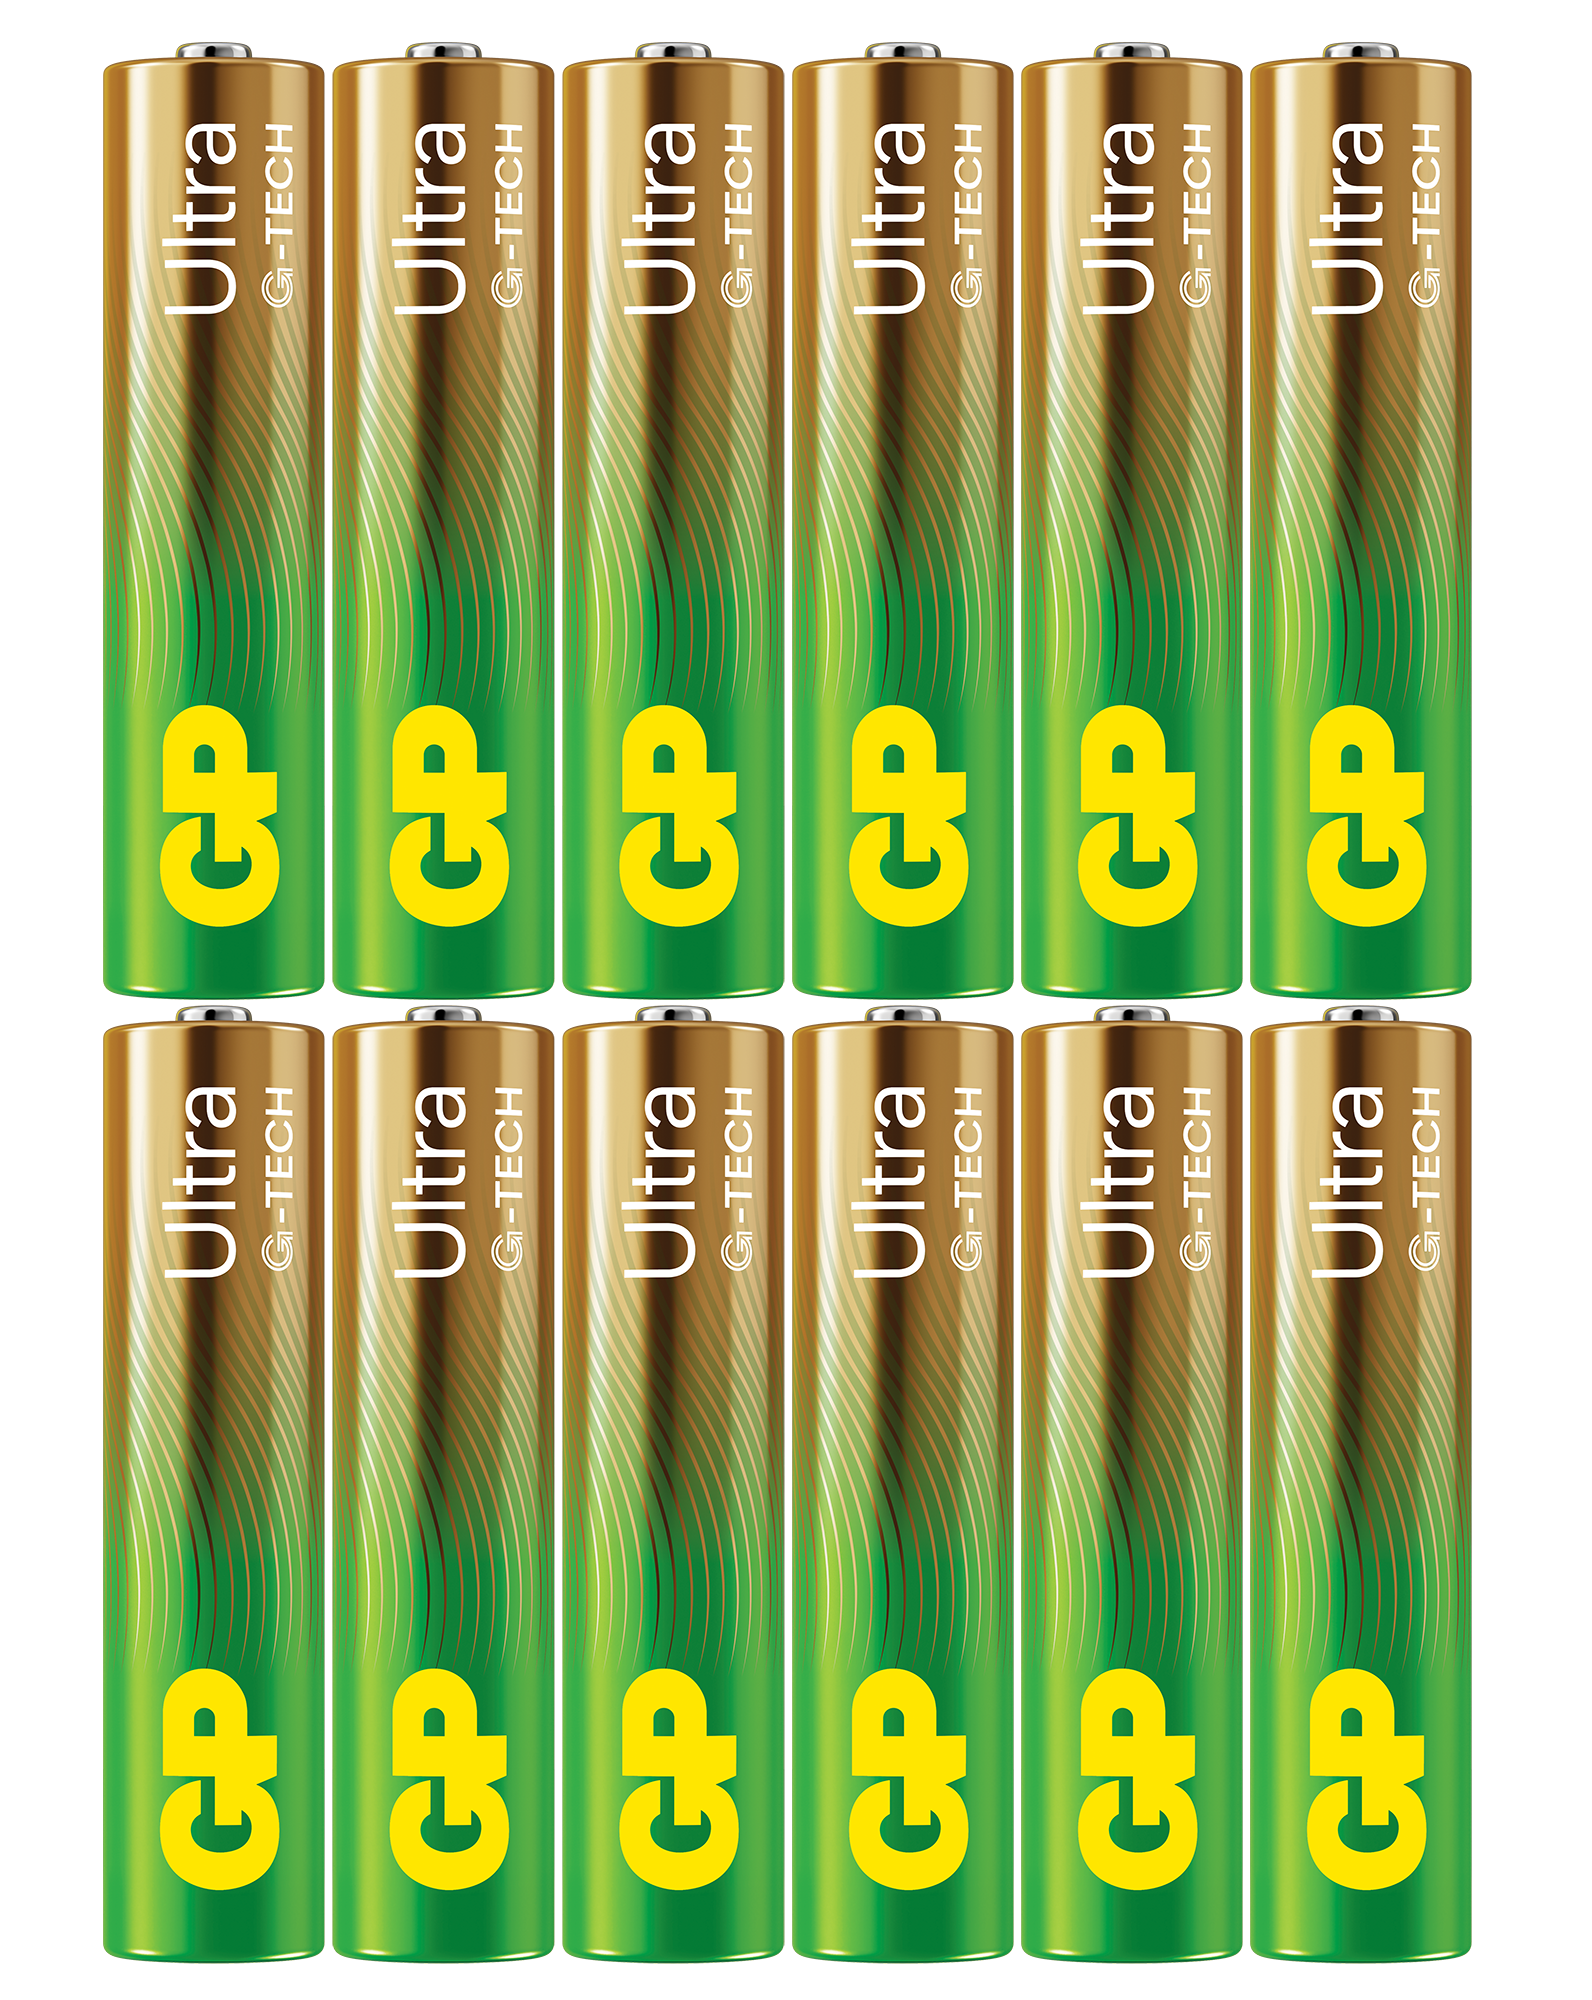 Ultra Alkaline AAA-Batterie 24AU/LR03 (12 Stück)